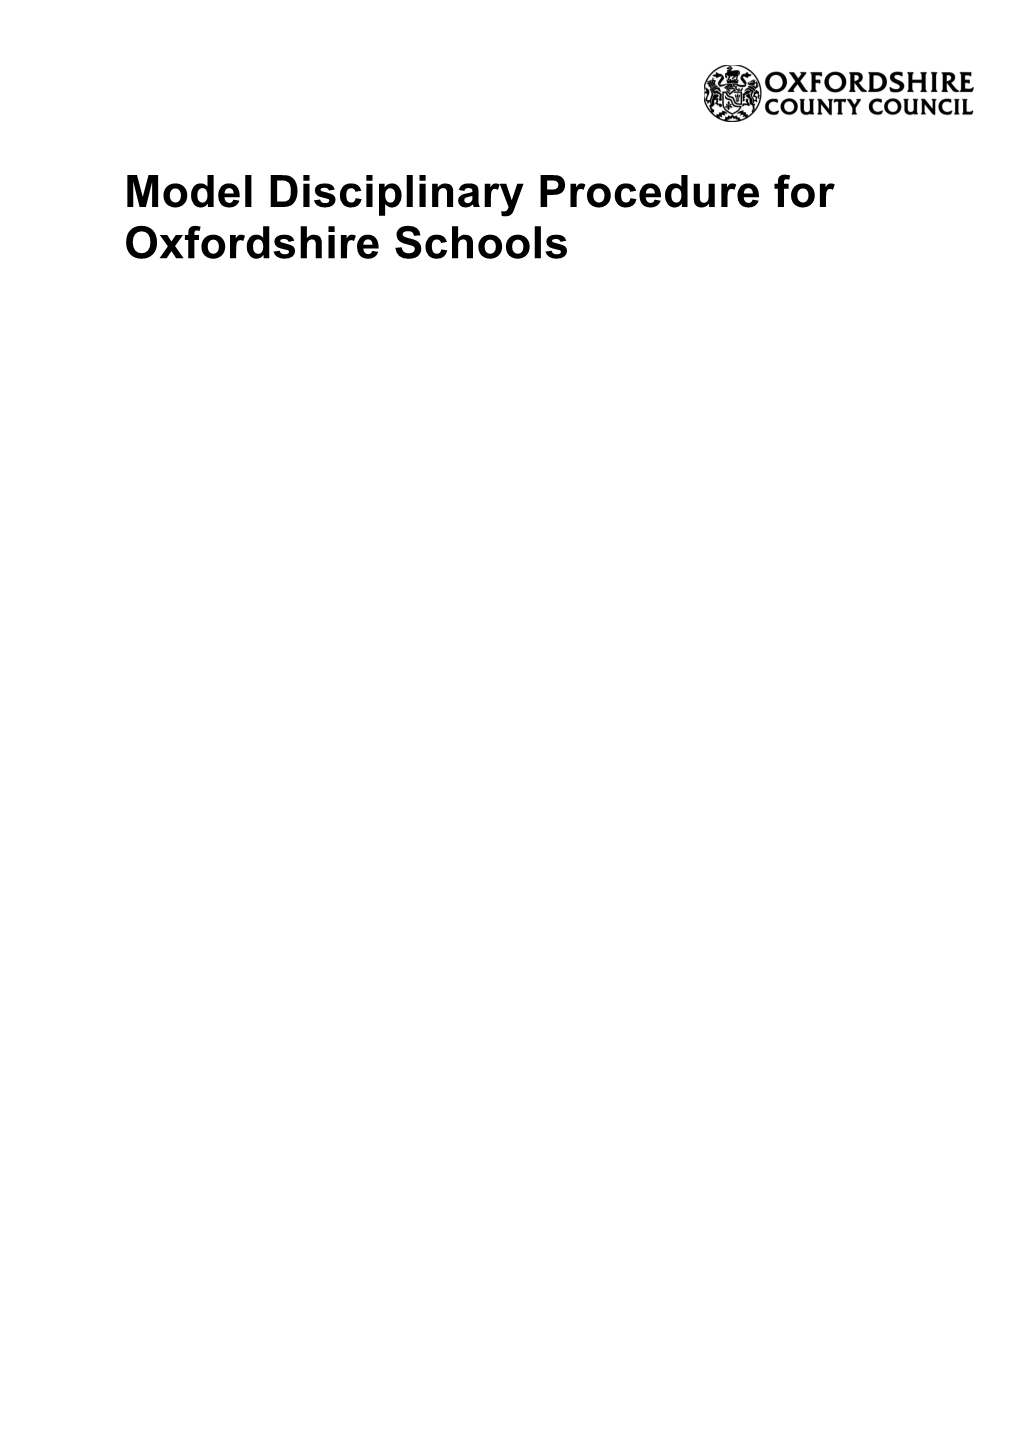 Model Disciplinary Procedure for Oxfordshire Schools